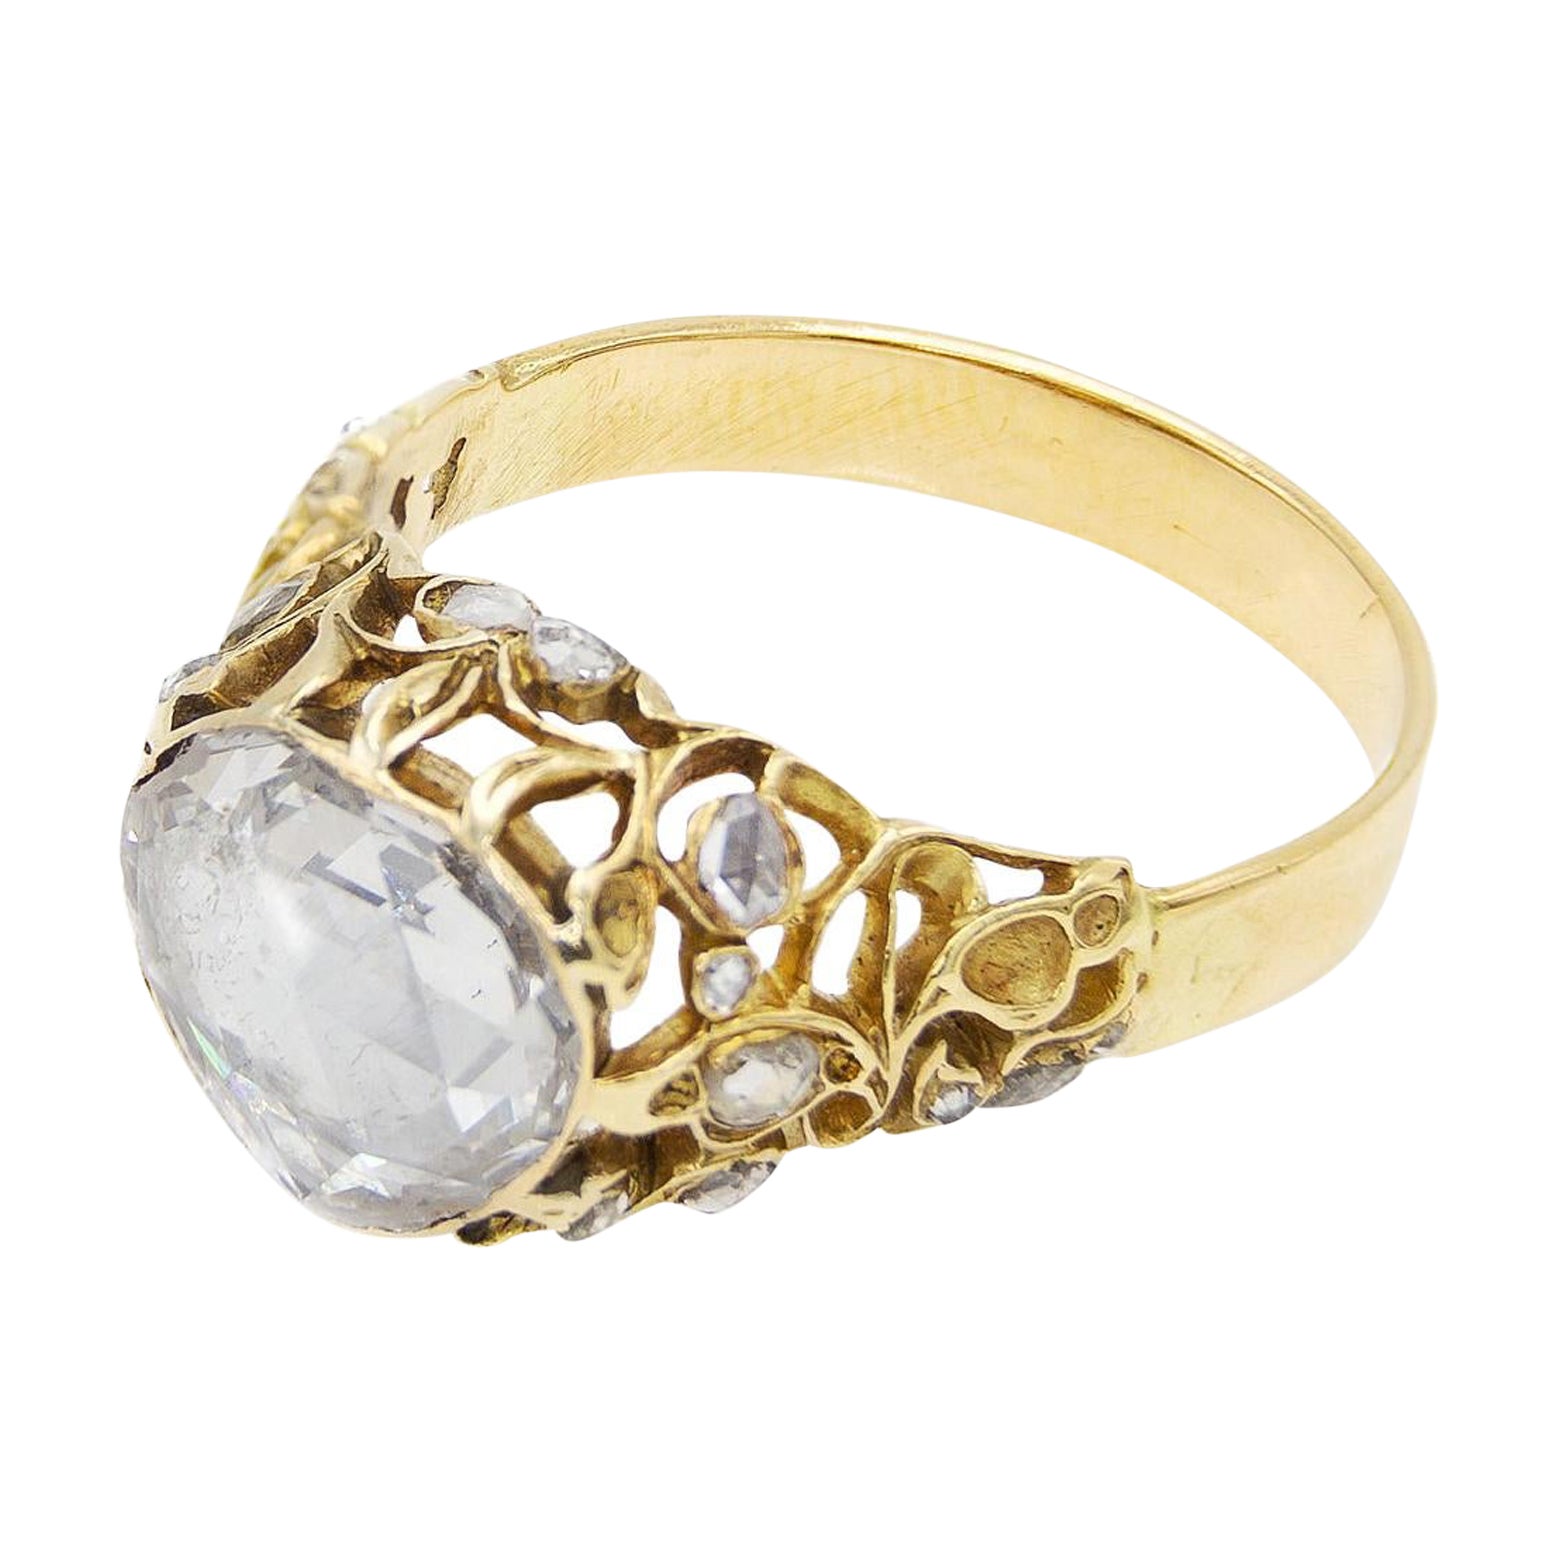 French Victorian 2.7 Carat Rose Cut Diamond Ring  in 18 Karat Yellow Gold